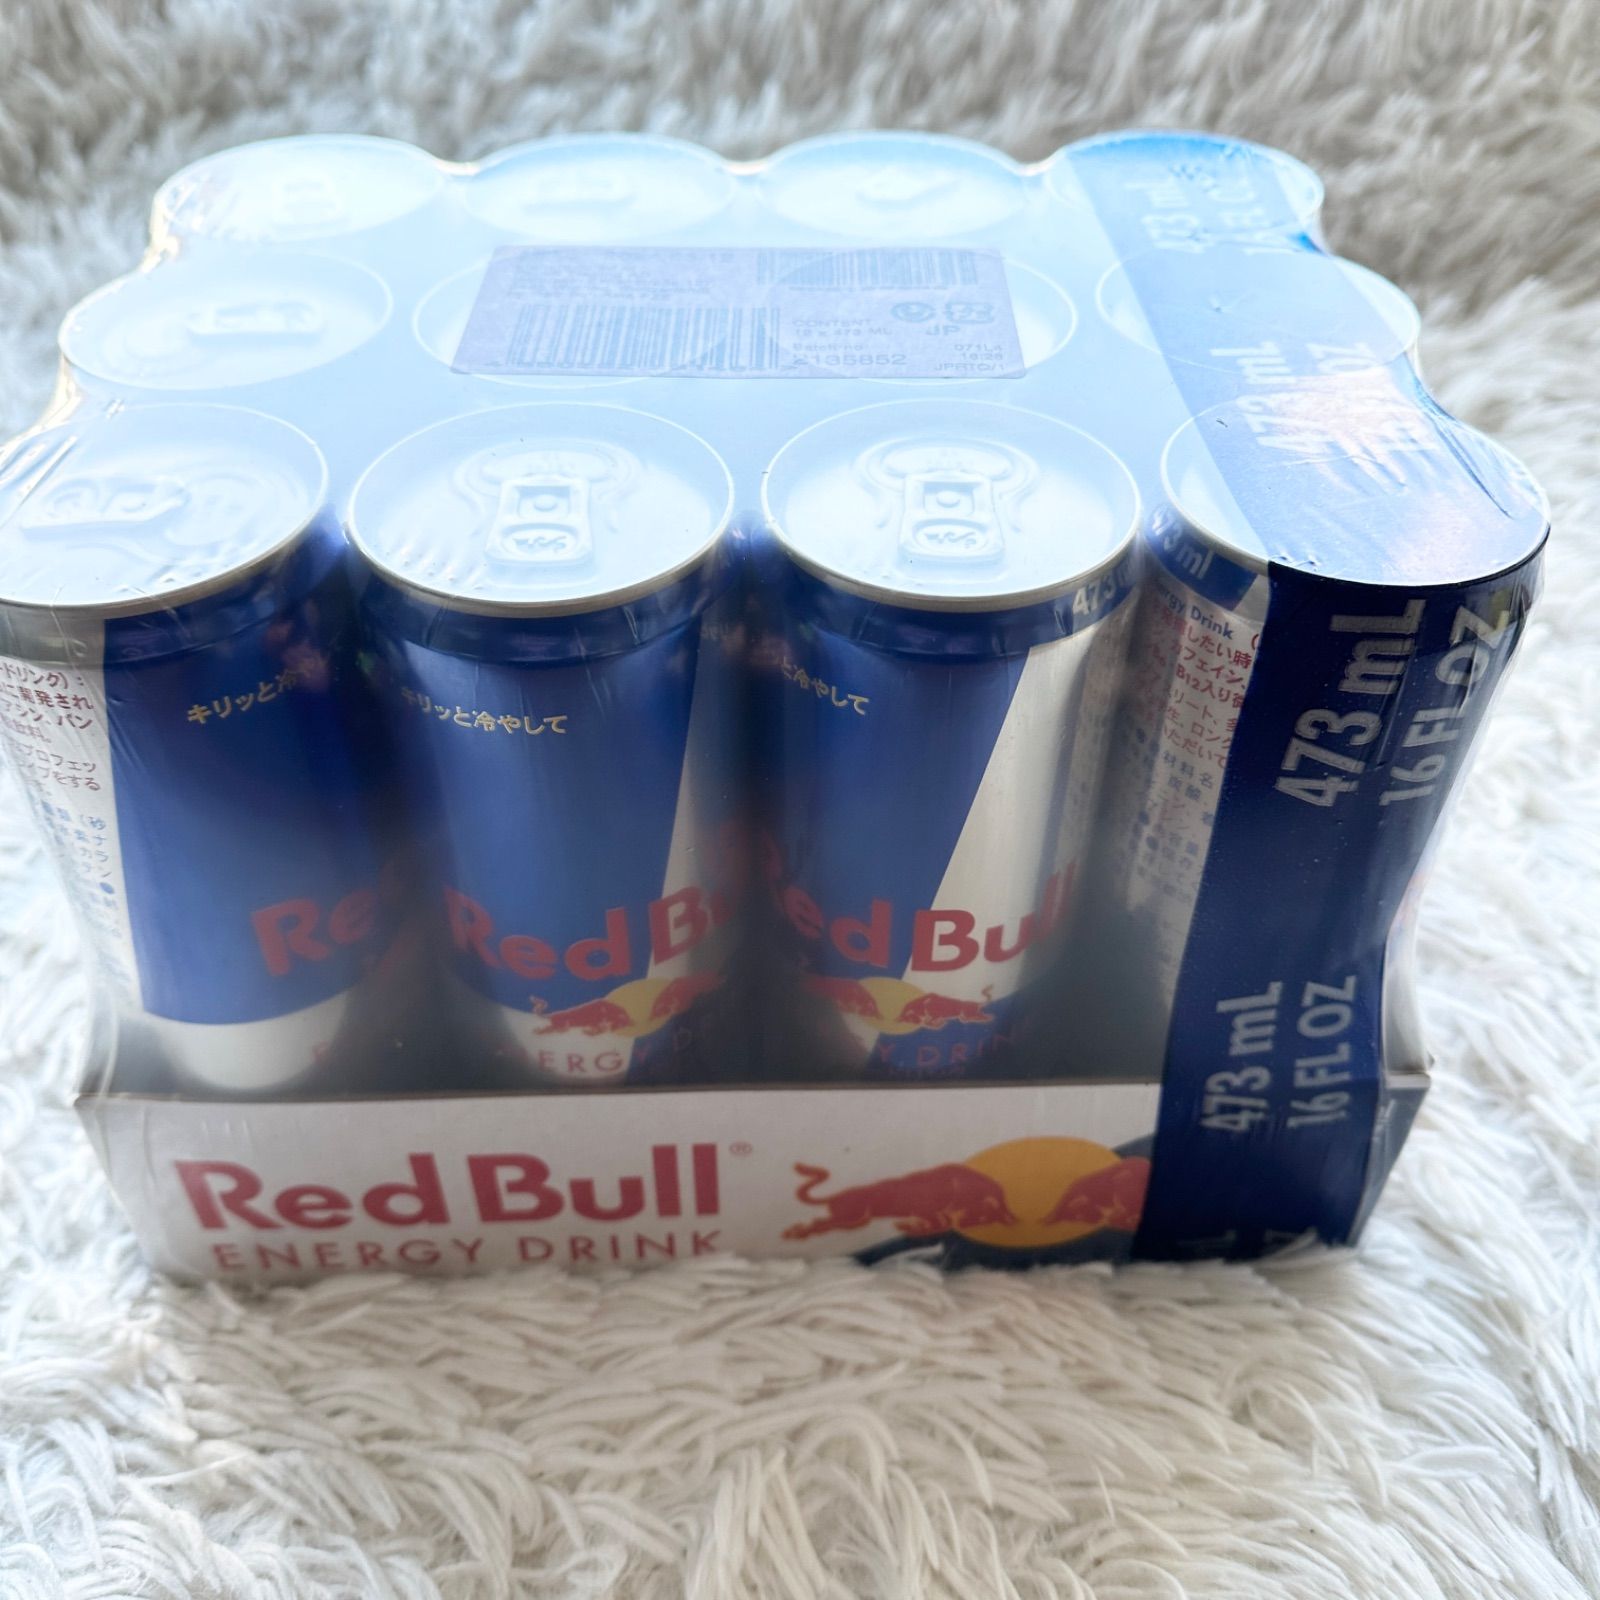 Red Bull レッドブル エナジードリンク 473ml×12本 - メルカリ